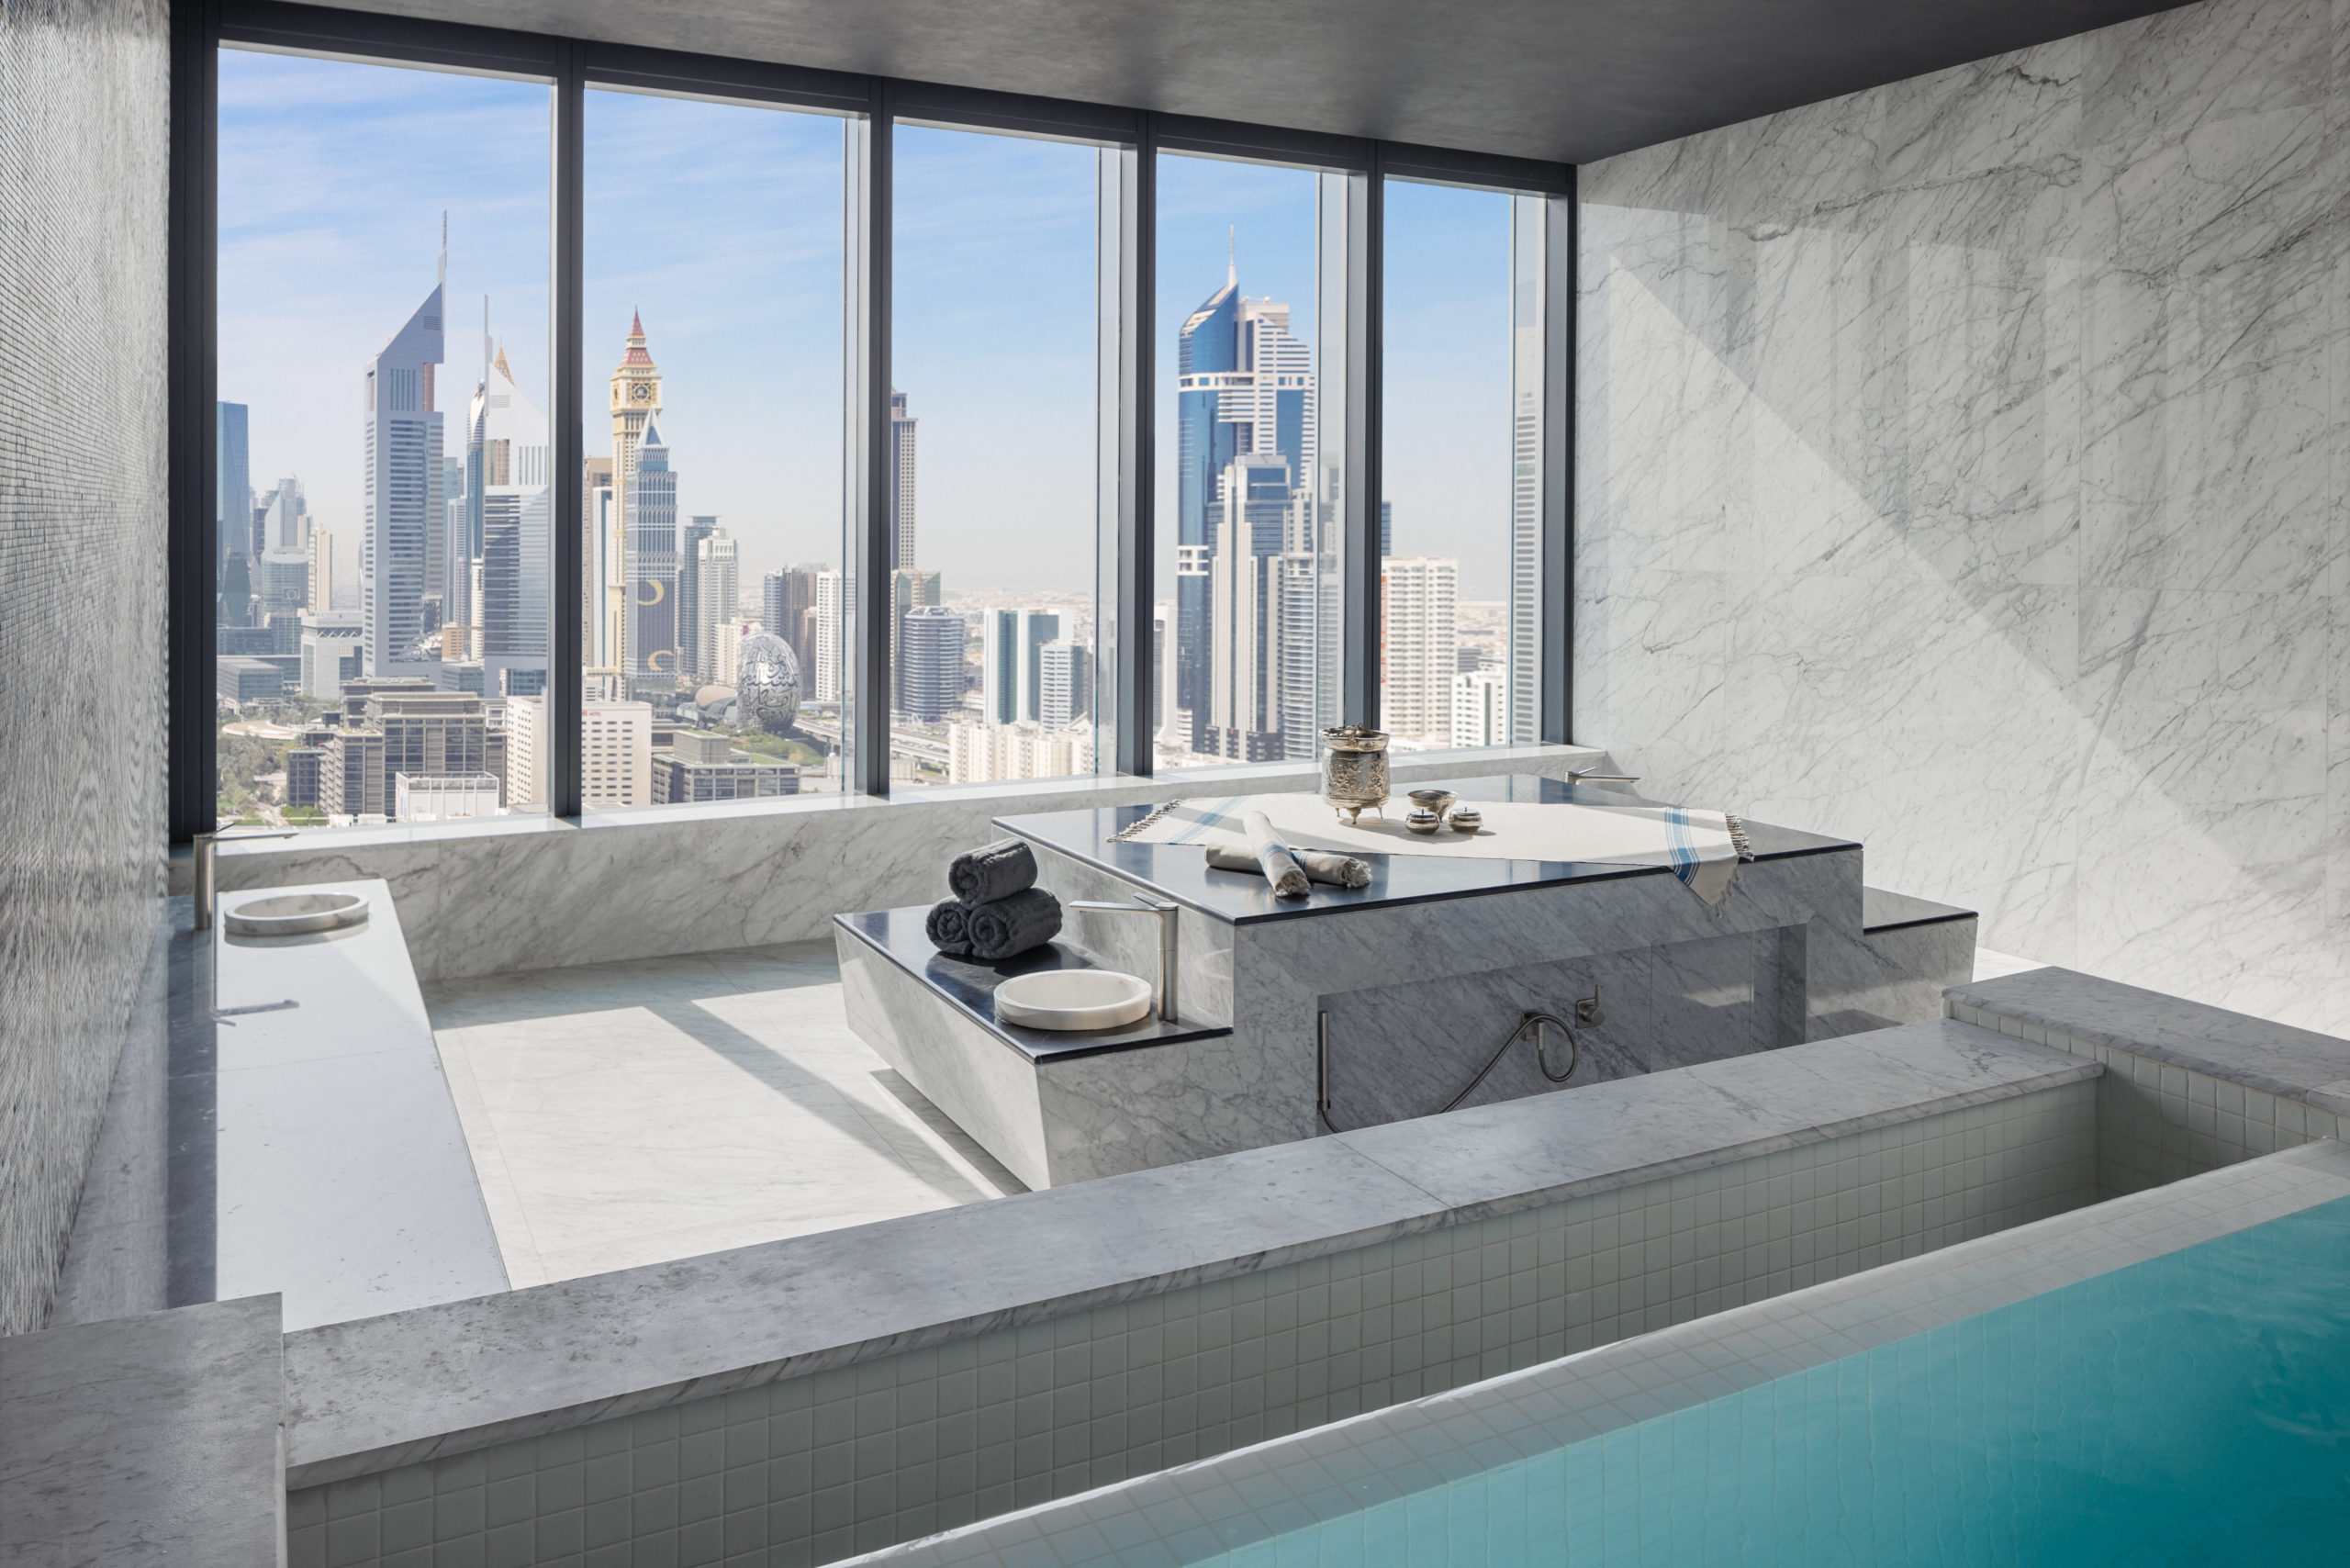 Longevity Hub by Clinique La Prairie has landed at Dubai’s landmark One&Only One Za’abeel hotel